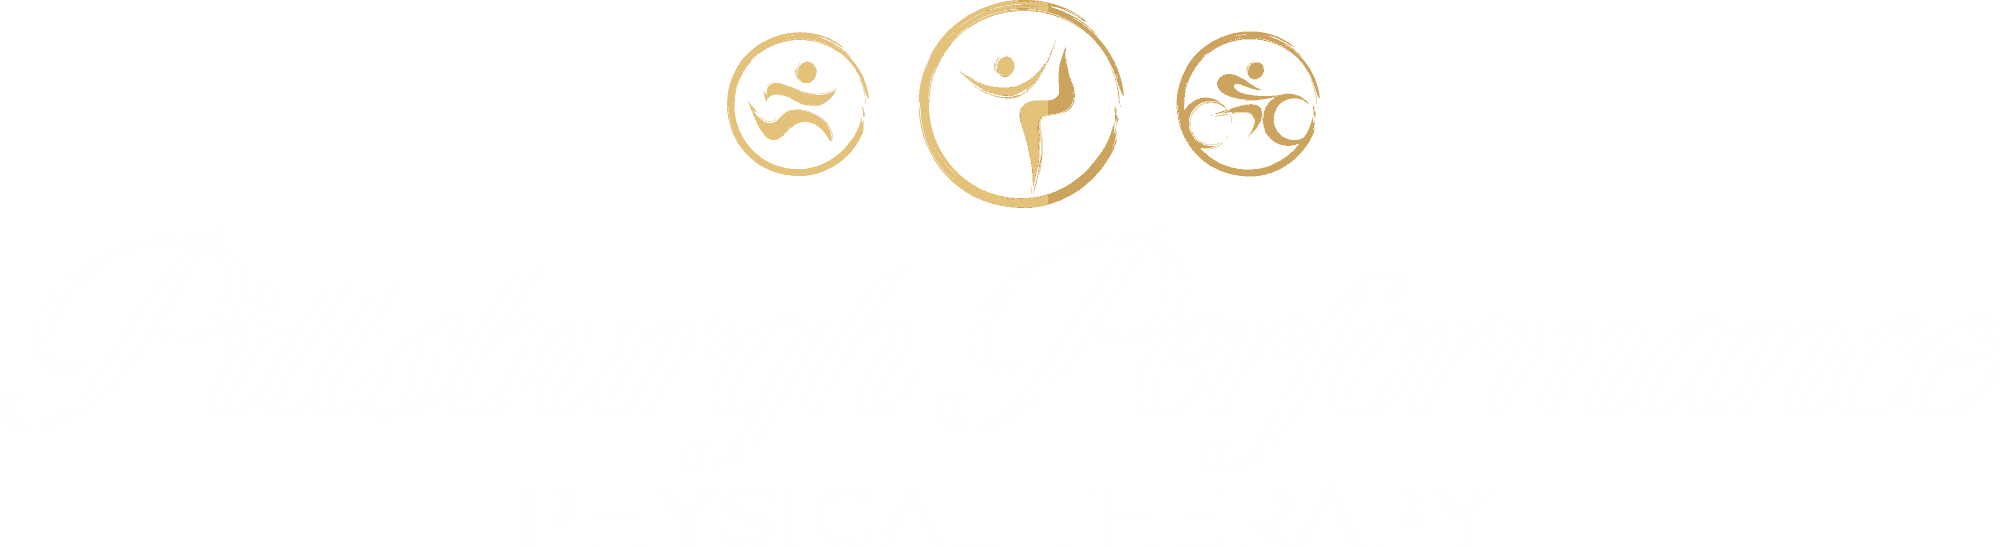 pgh-perf-logo-wordmark-inverse